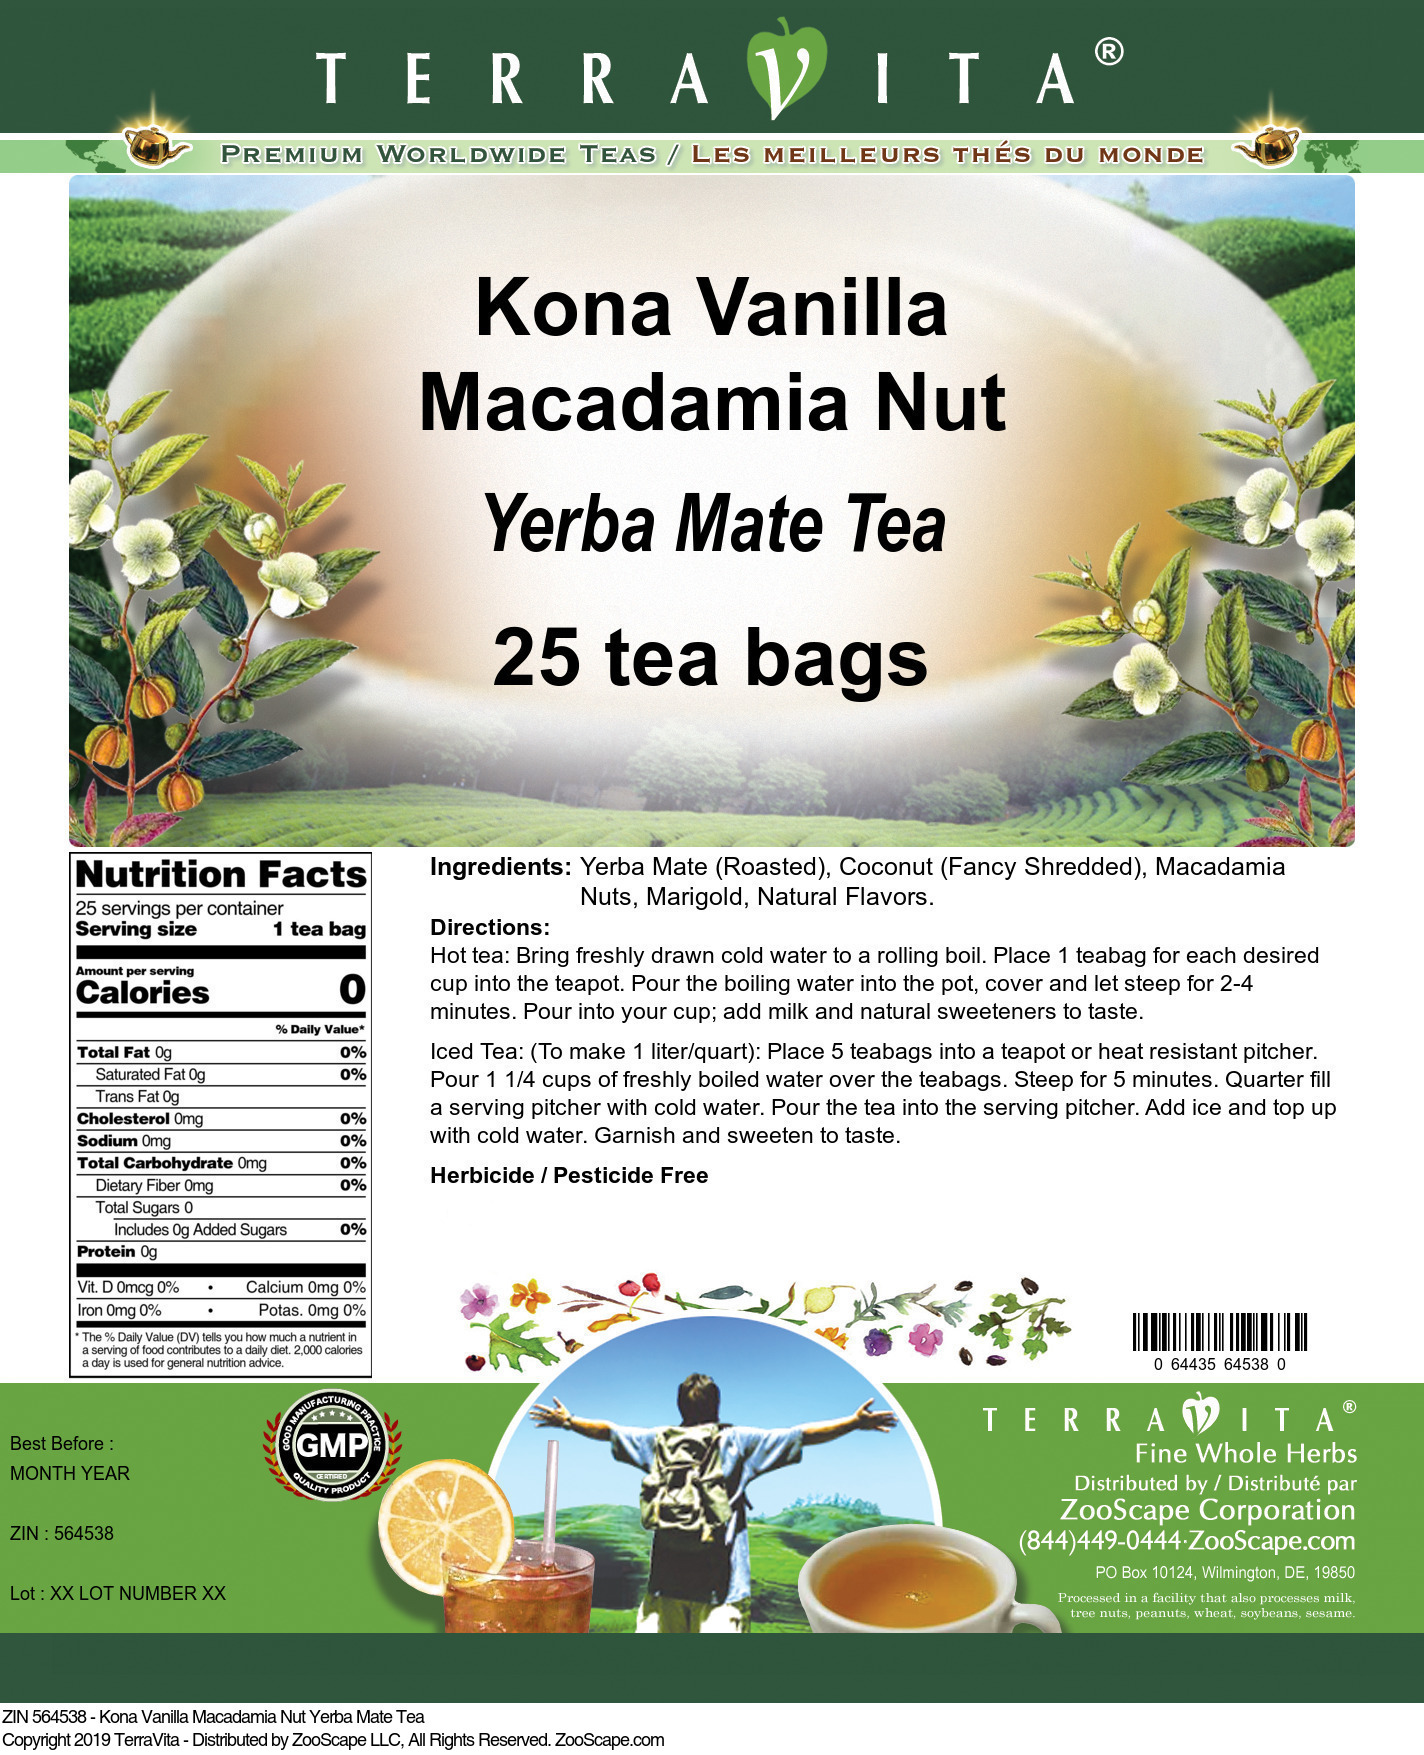 Kona Vanilla Macadamia Nut Yerba Mate Tea - Label